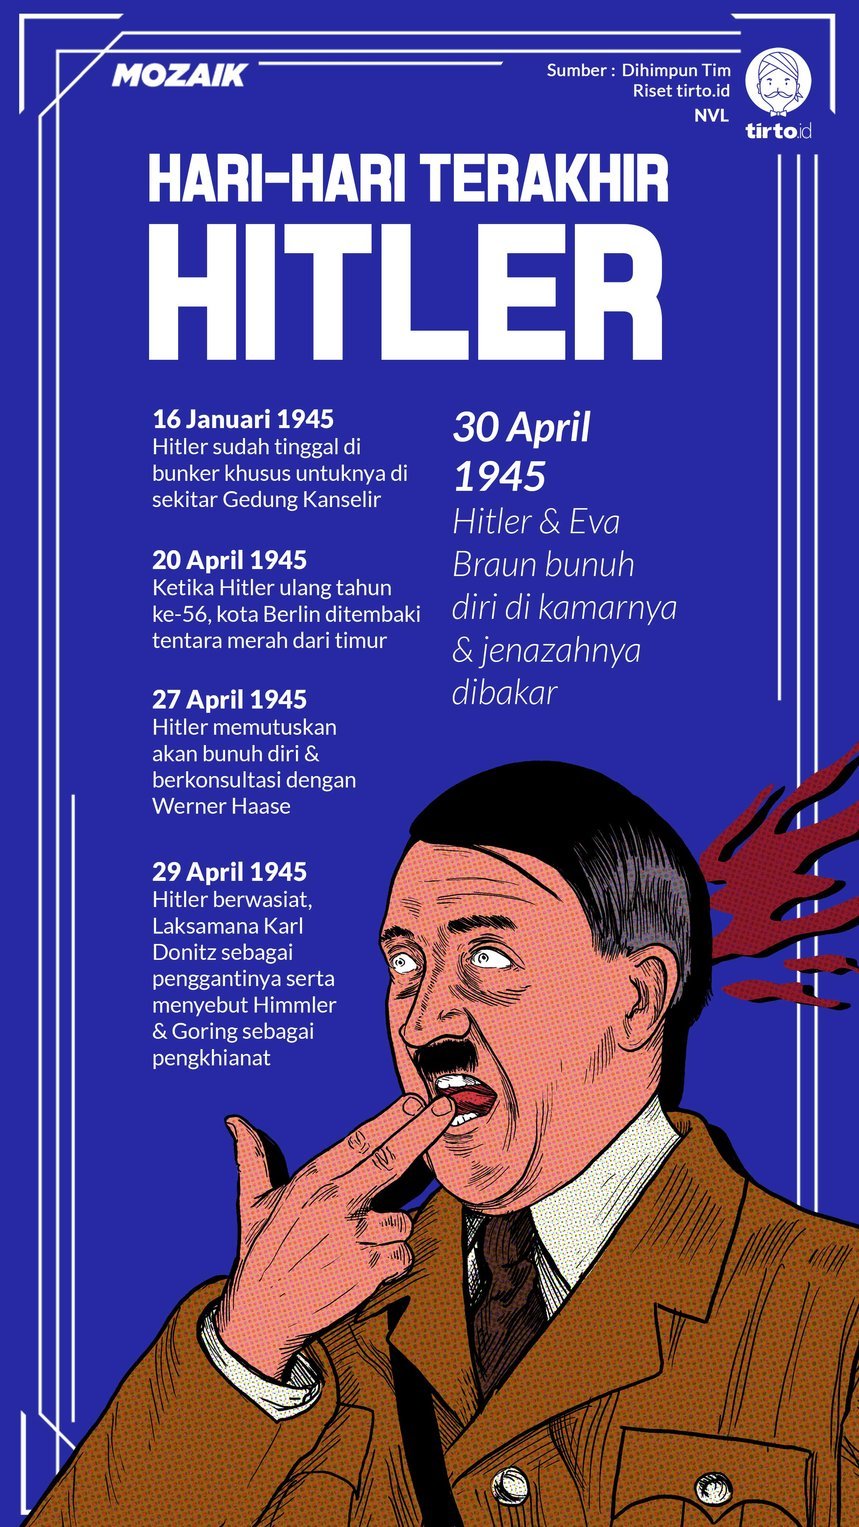 Infografik Mozaik Adolf Hitler